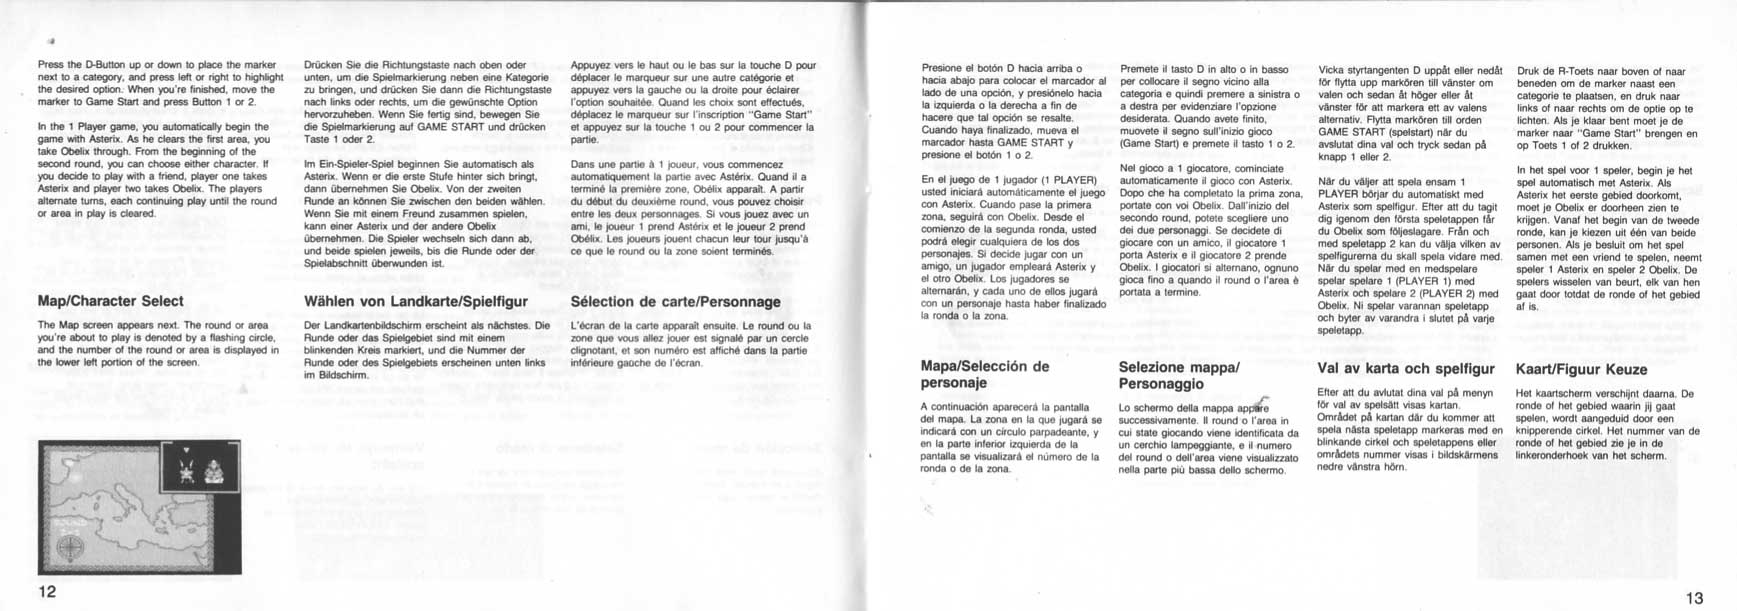 Astérix Jeux Master System Notice page 12-13